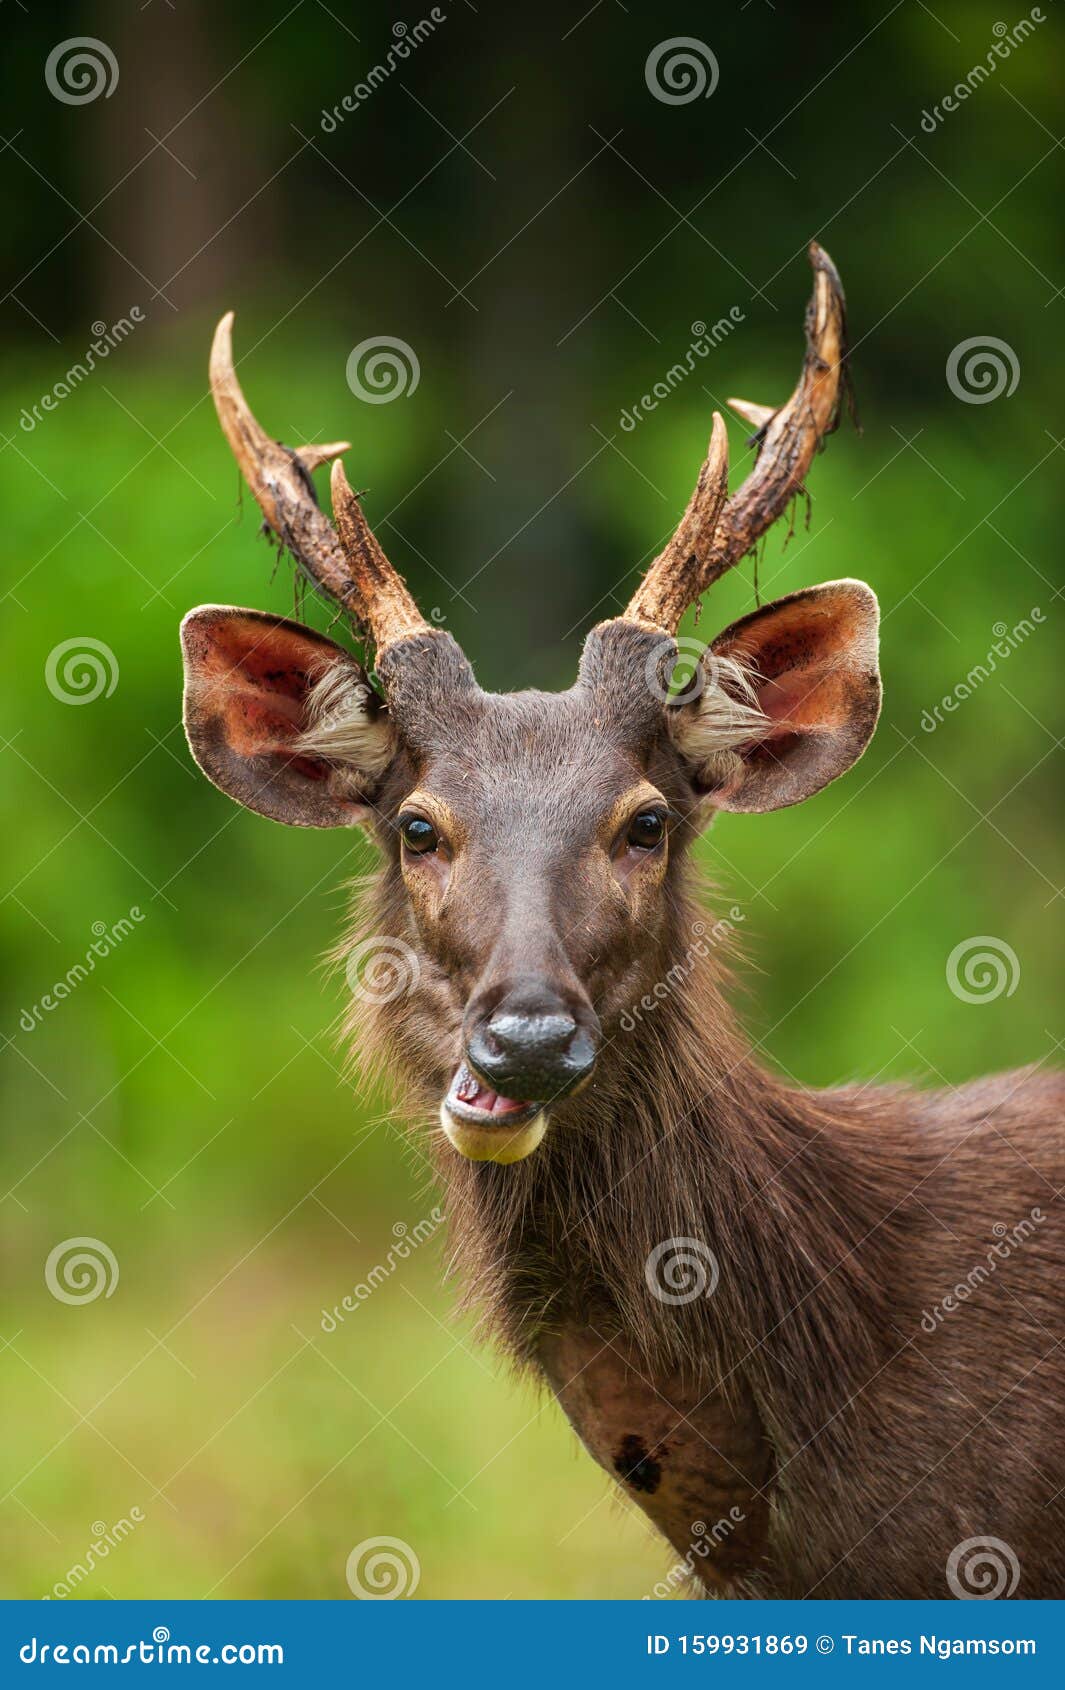 Male Sambar Deer Enjoy Eating Wild Fruit Stock Image - Image of jungle,  deer: 159931869